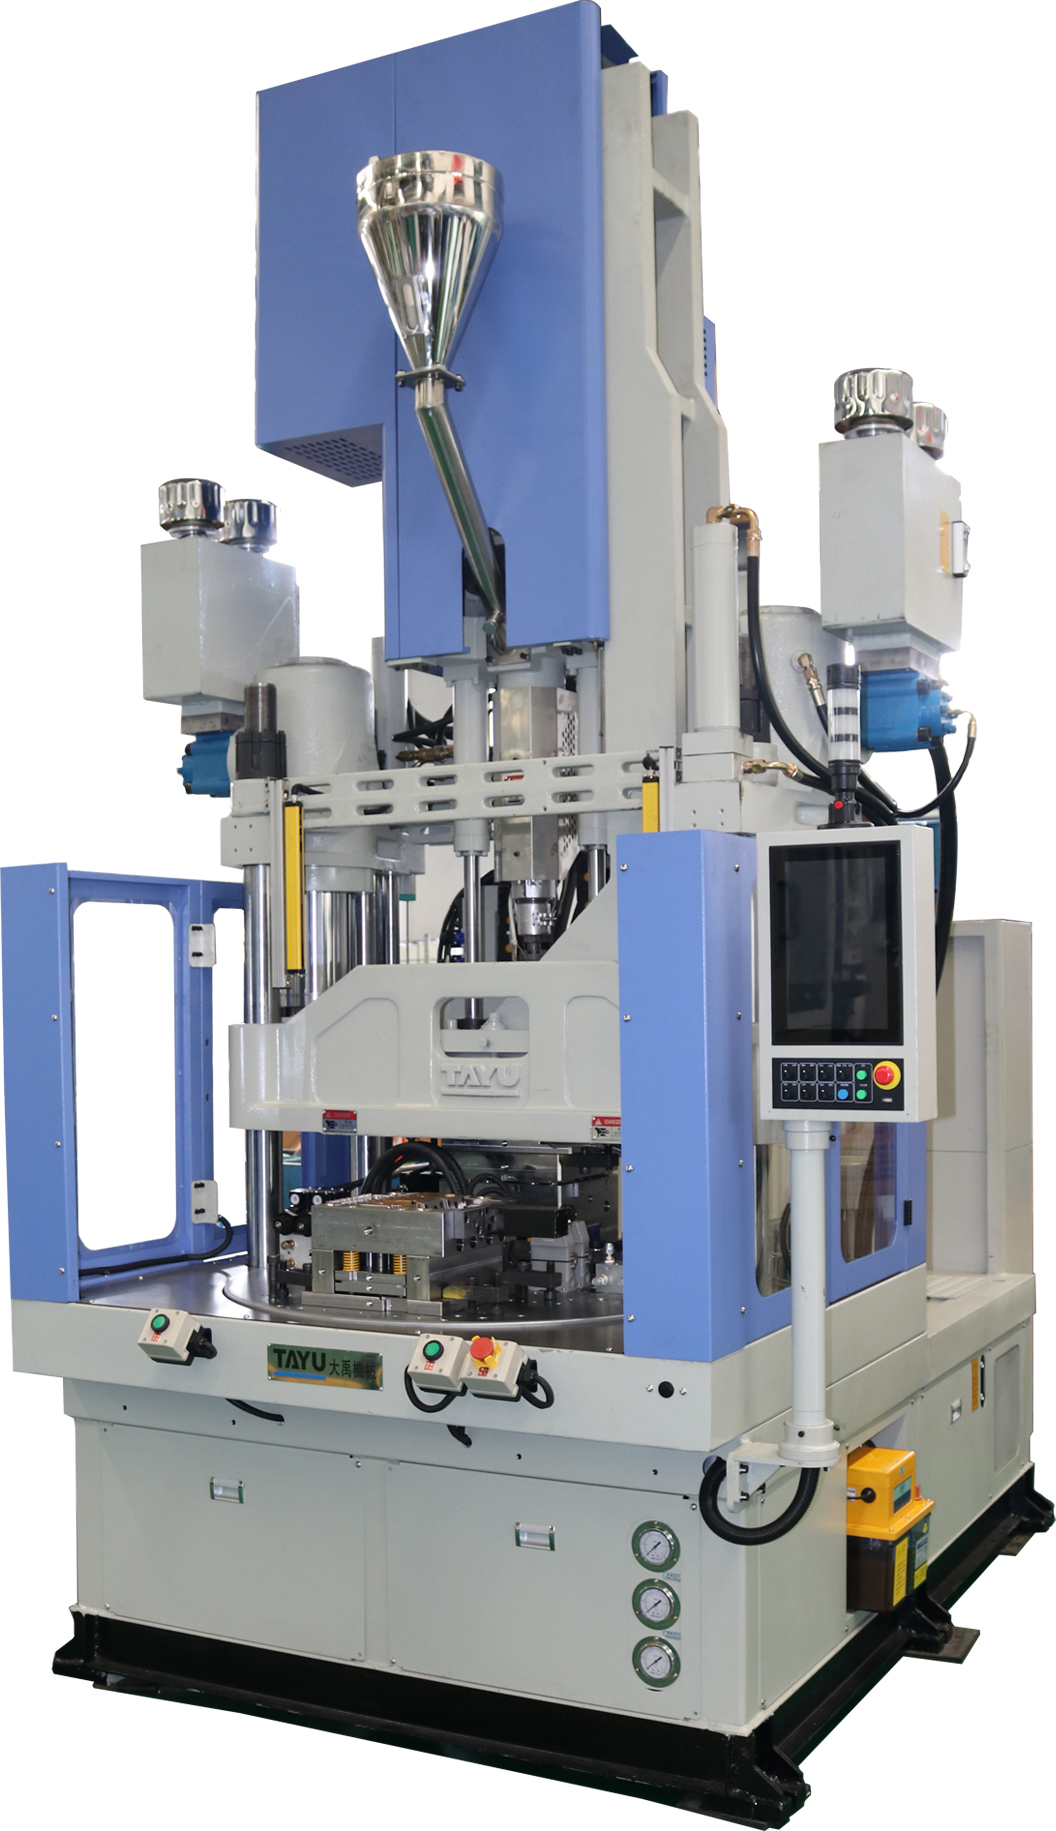 ETU-850.2R vertical injection molding machine